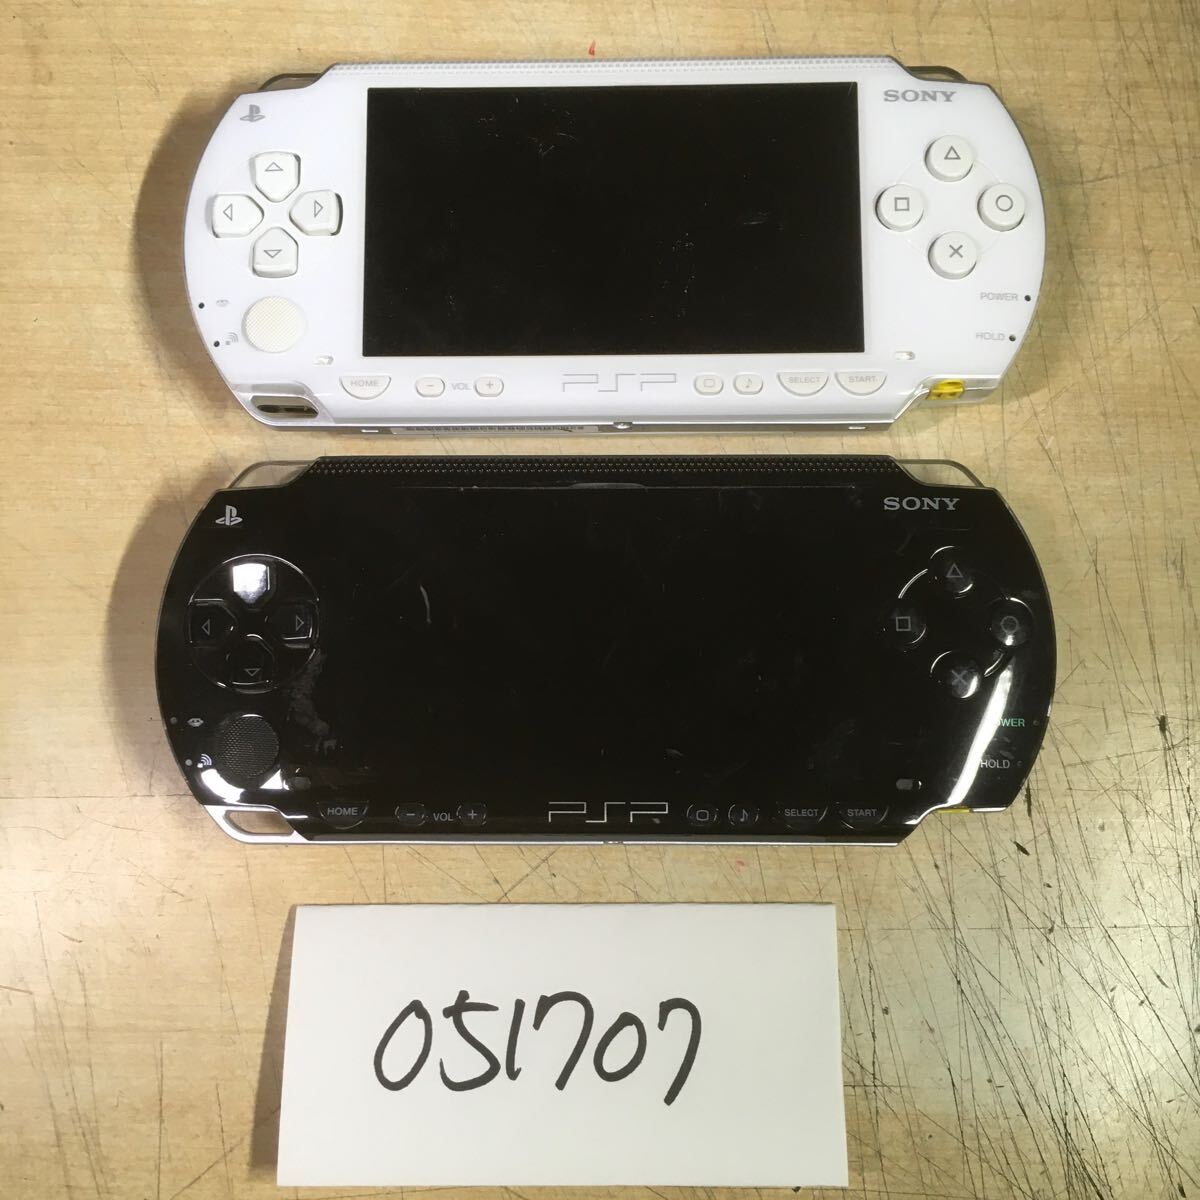 [ free shipping ](051707C) SONY PSP1000 body only junk 2 pcs. set 